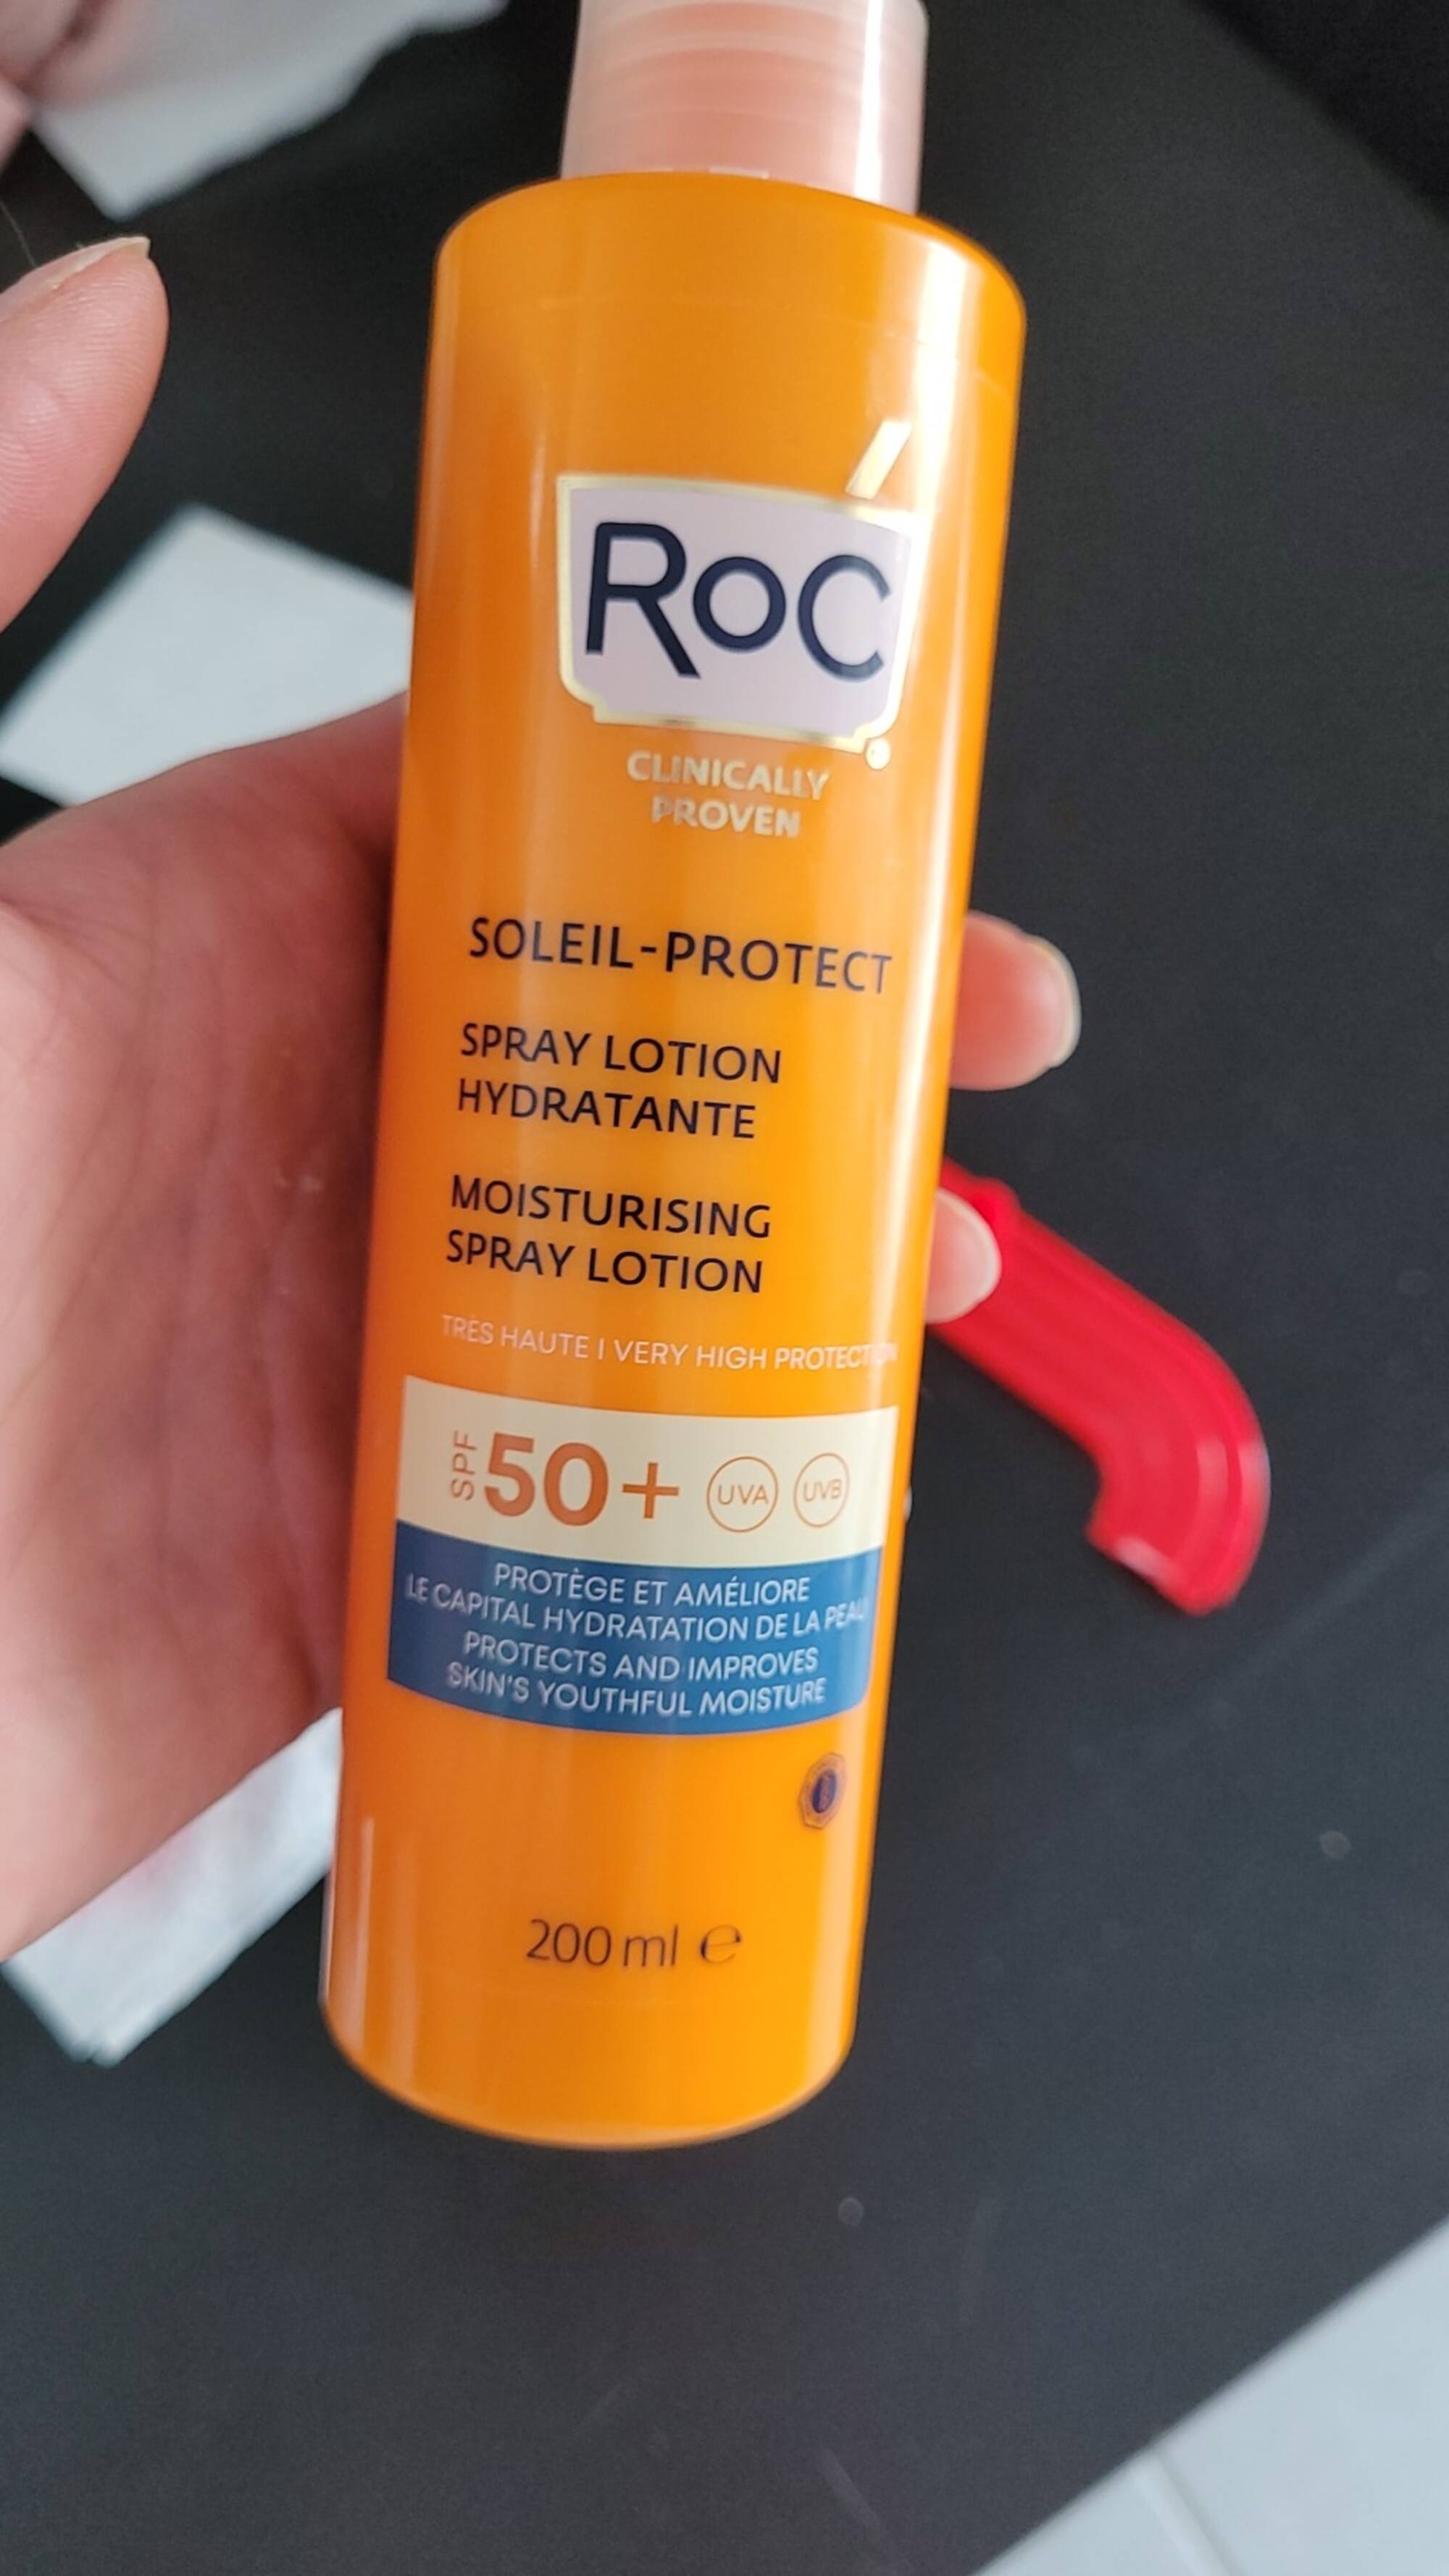 ROC - Soleil-protect - Spray lotion hydratante SPF 50+